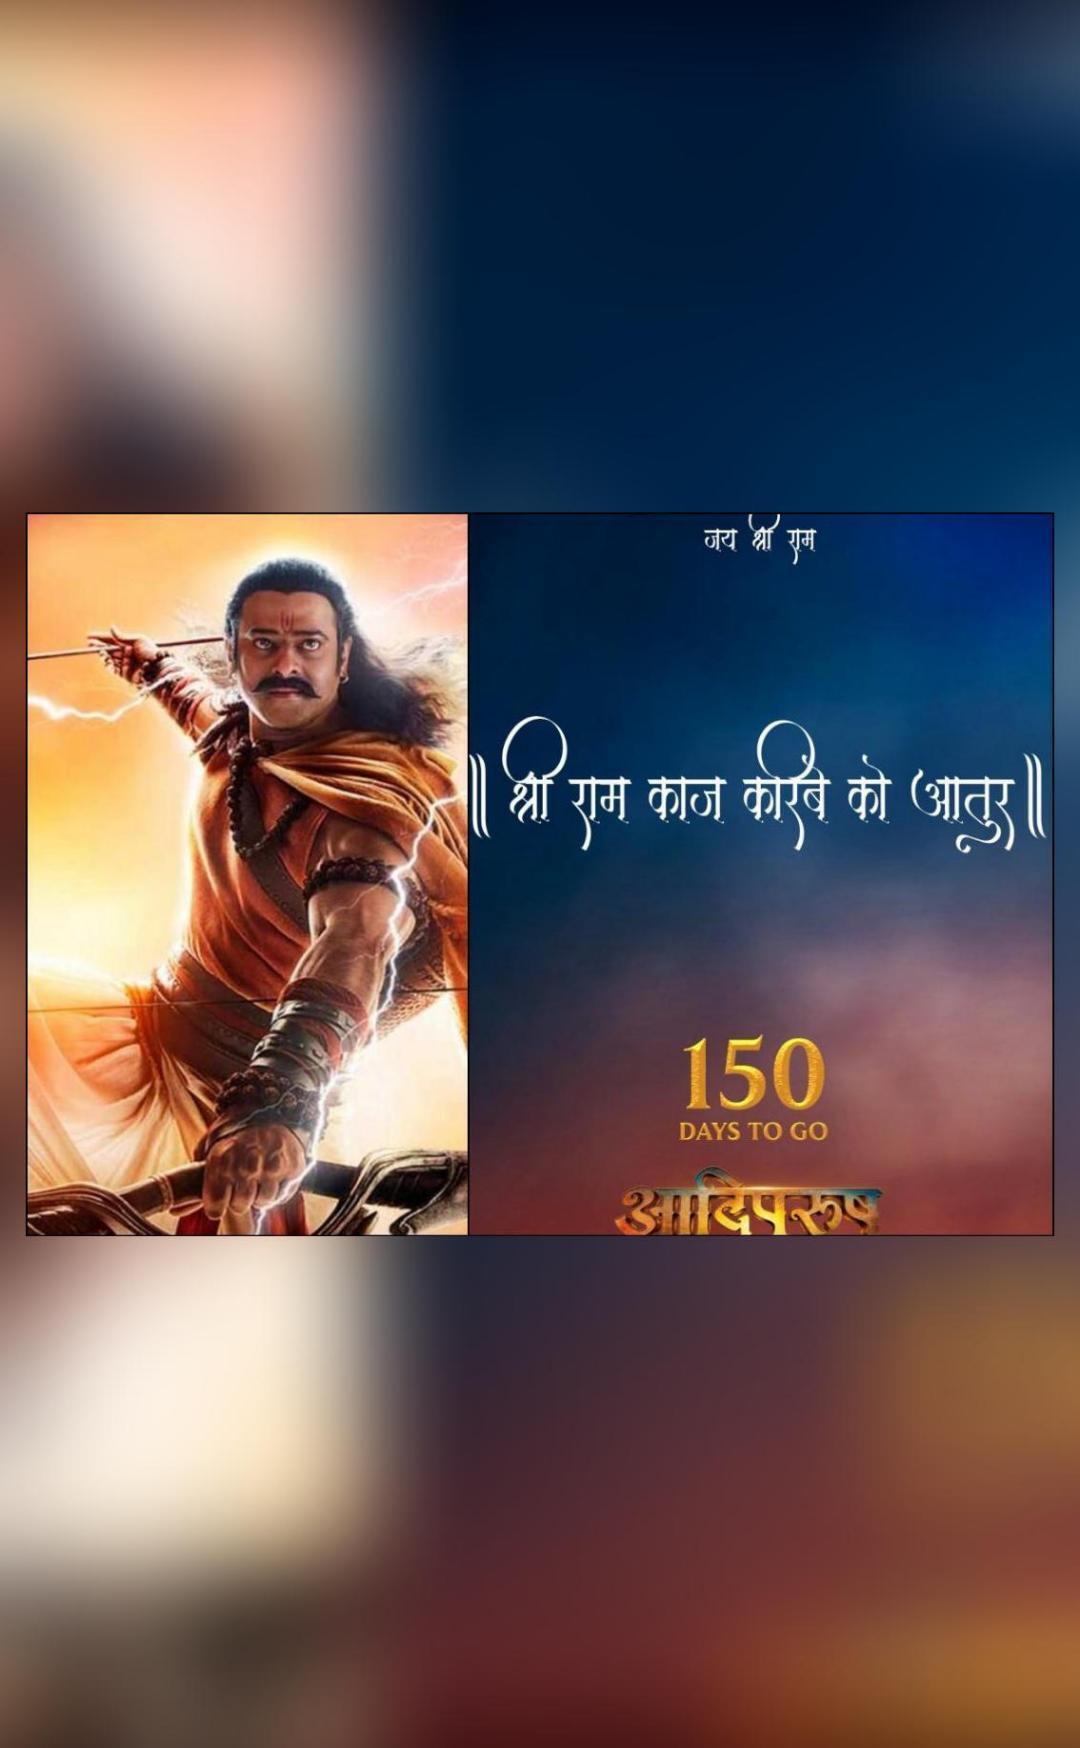 World will witness India's timeless epic in 150 days: Om Raut on Adipurush